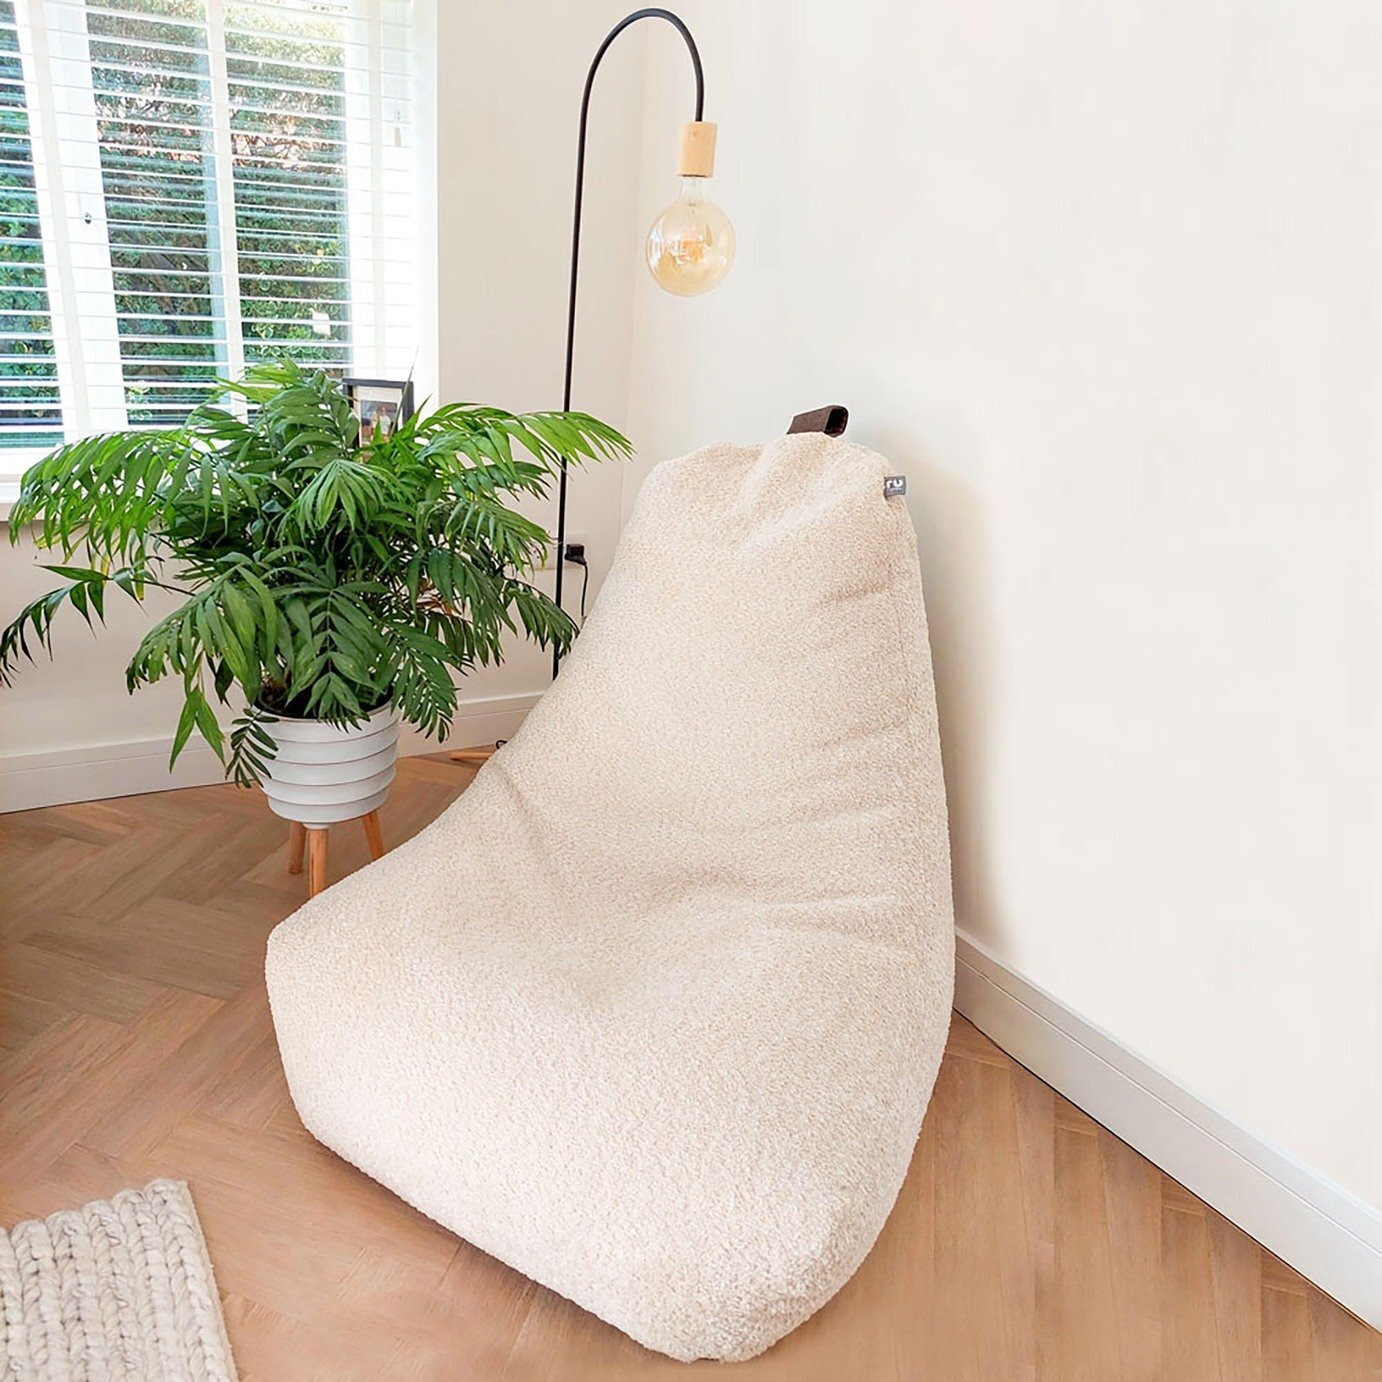 rucomfy Fabric Snug Bean Bag Chair - Oatmeal - image 1